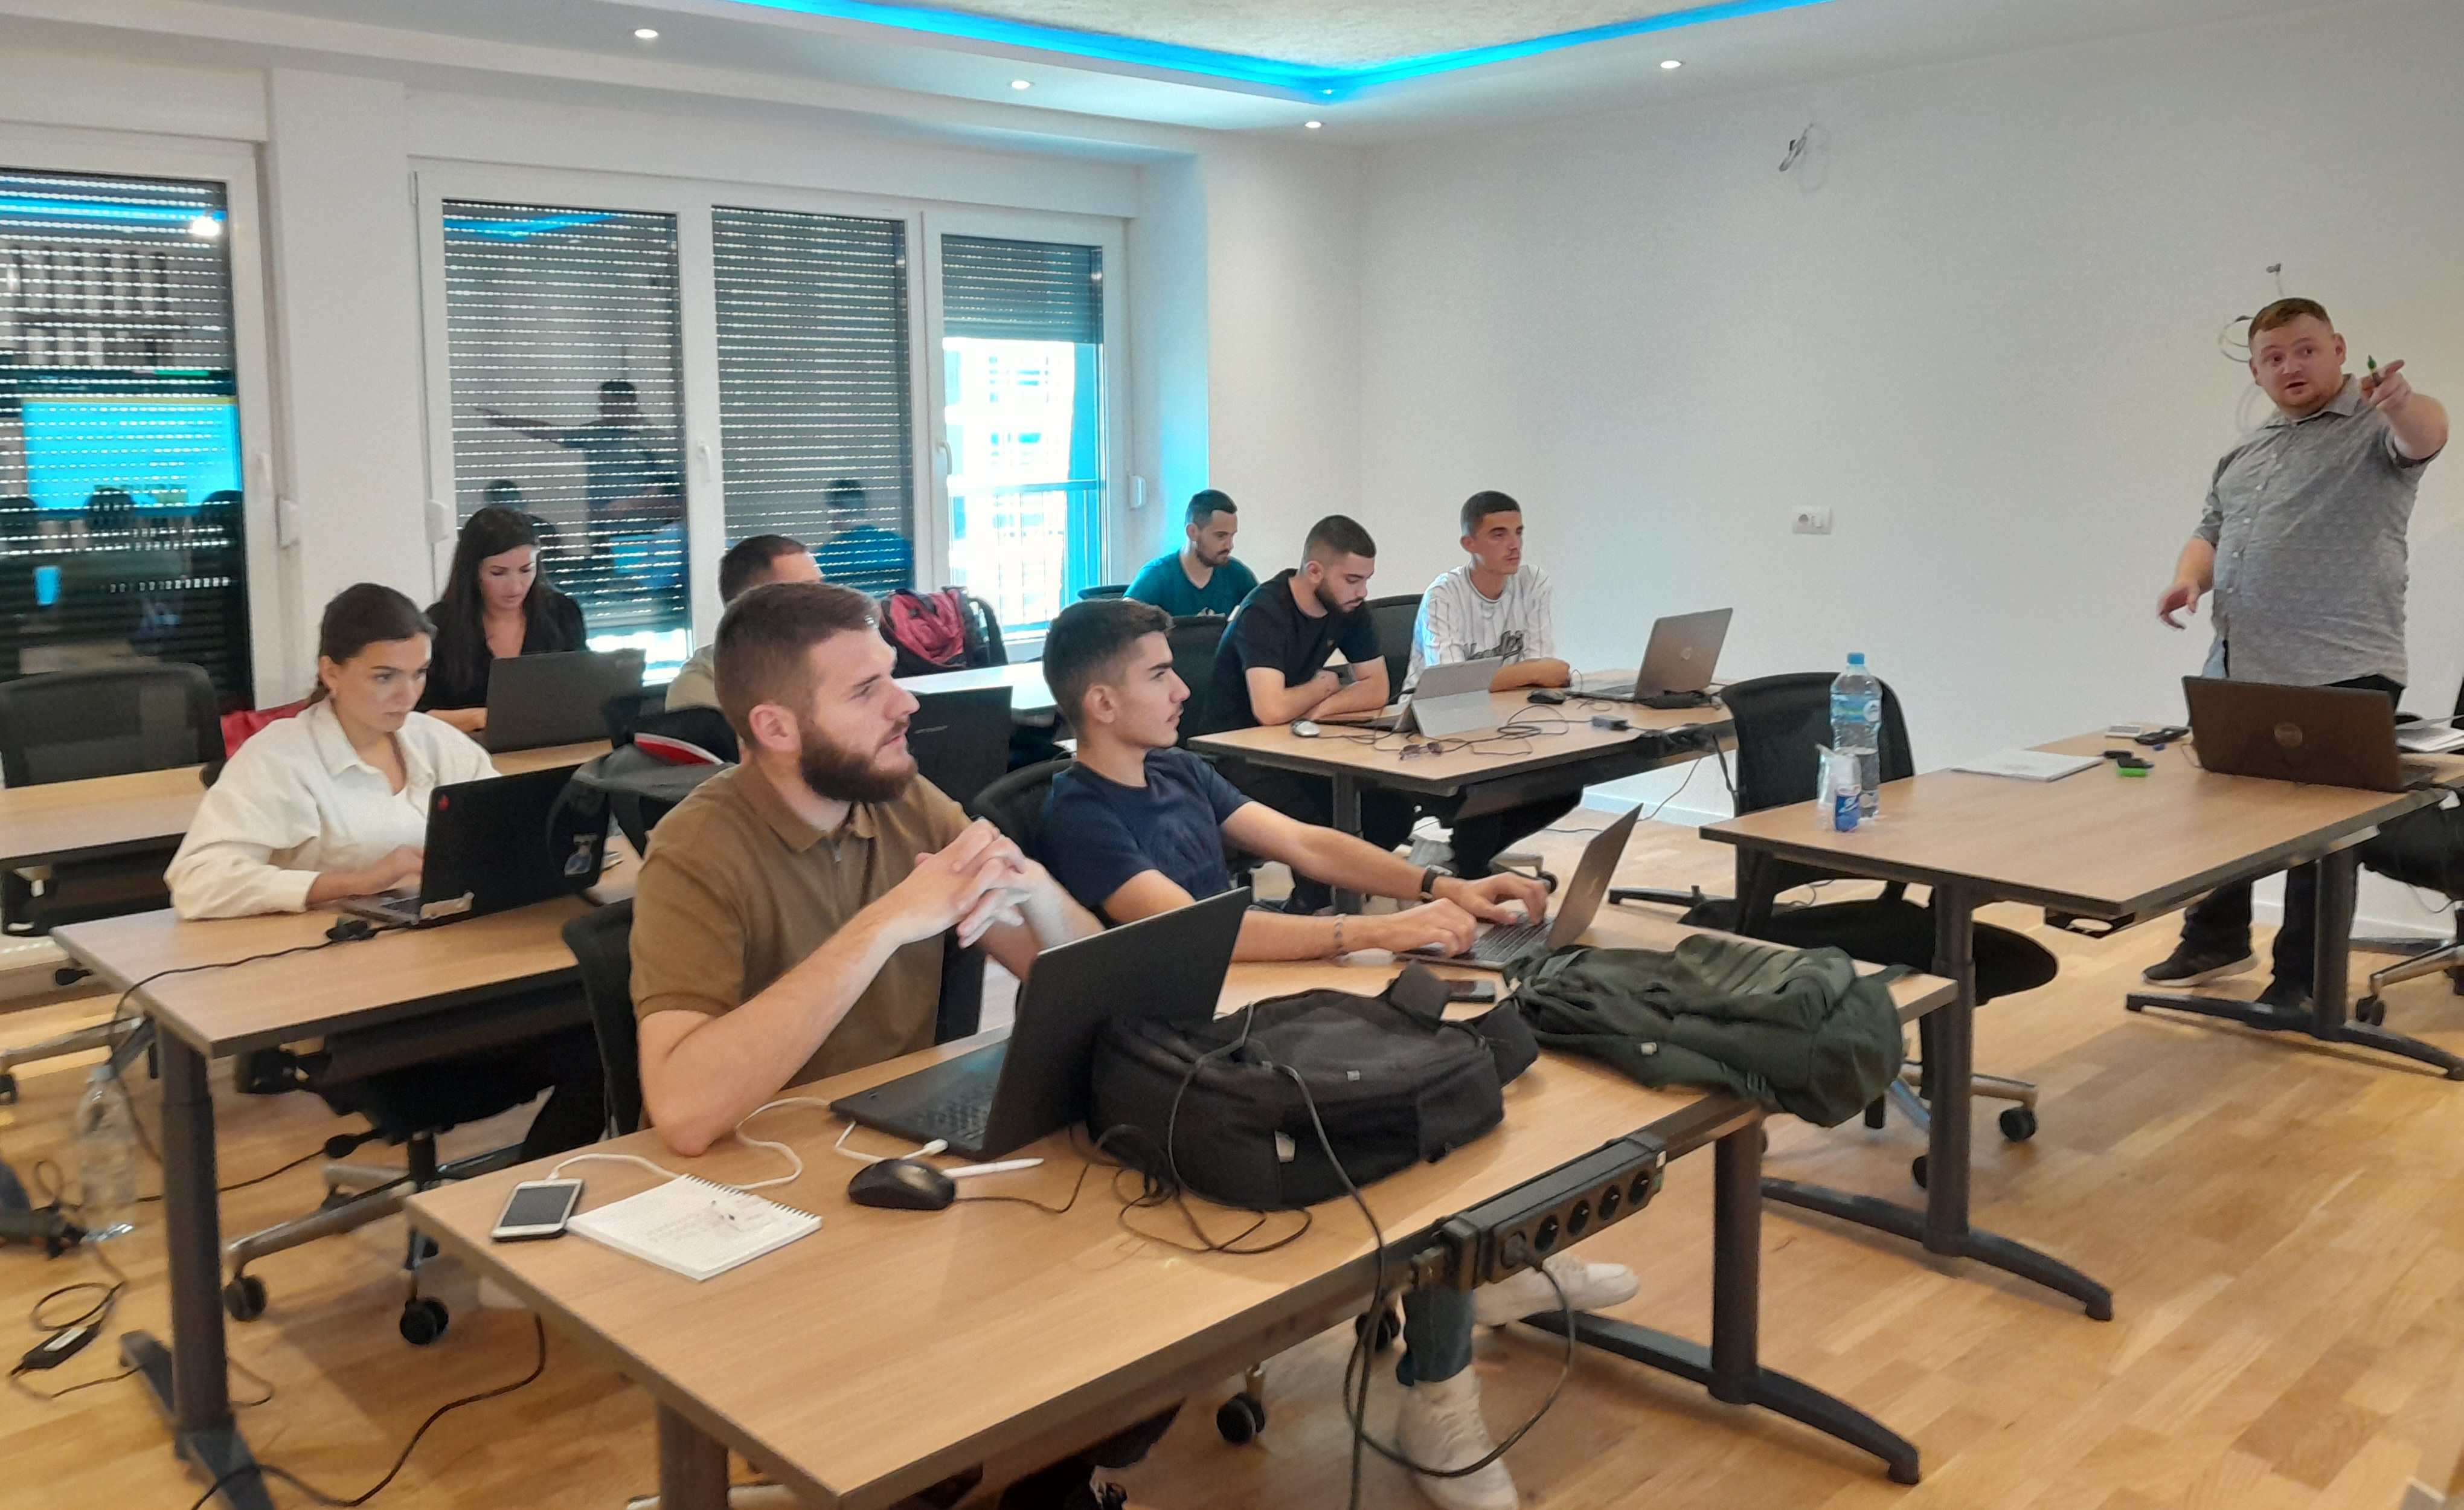 Students in the classroom, Coders Lab Kosova